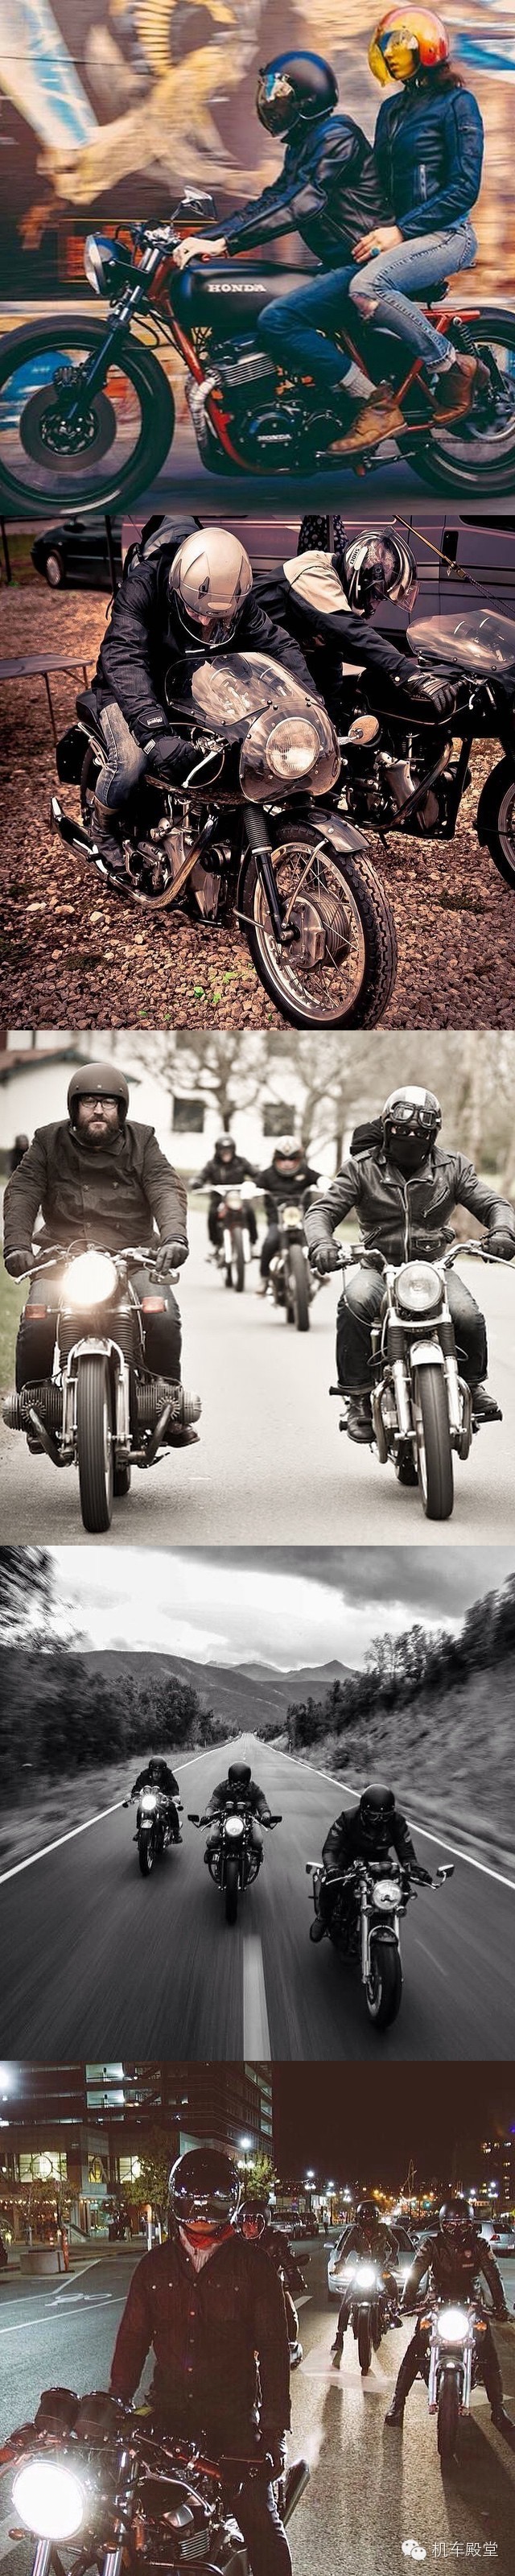 CAFE，对摩托车的热爱是一种生活姿态，更是一种追求，